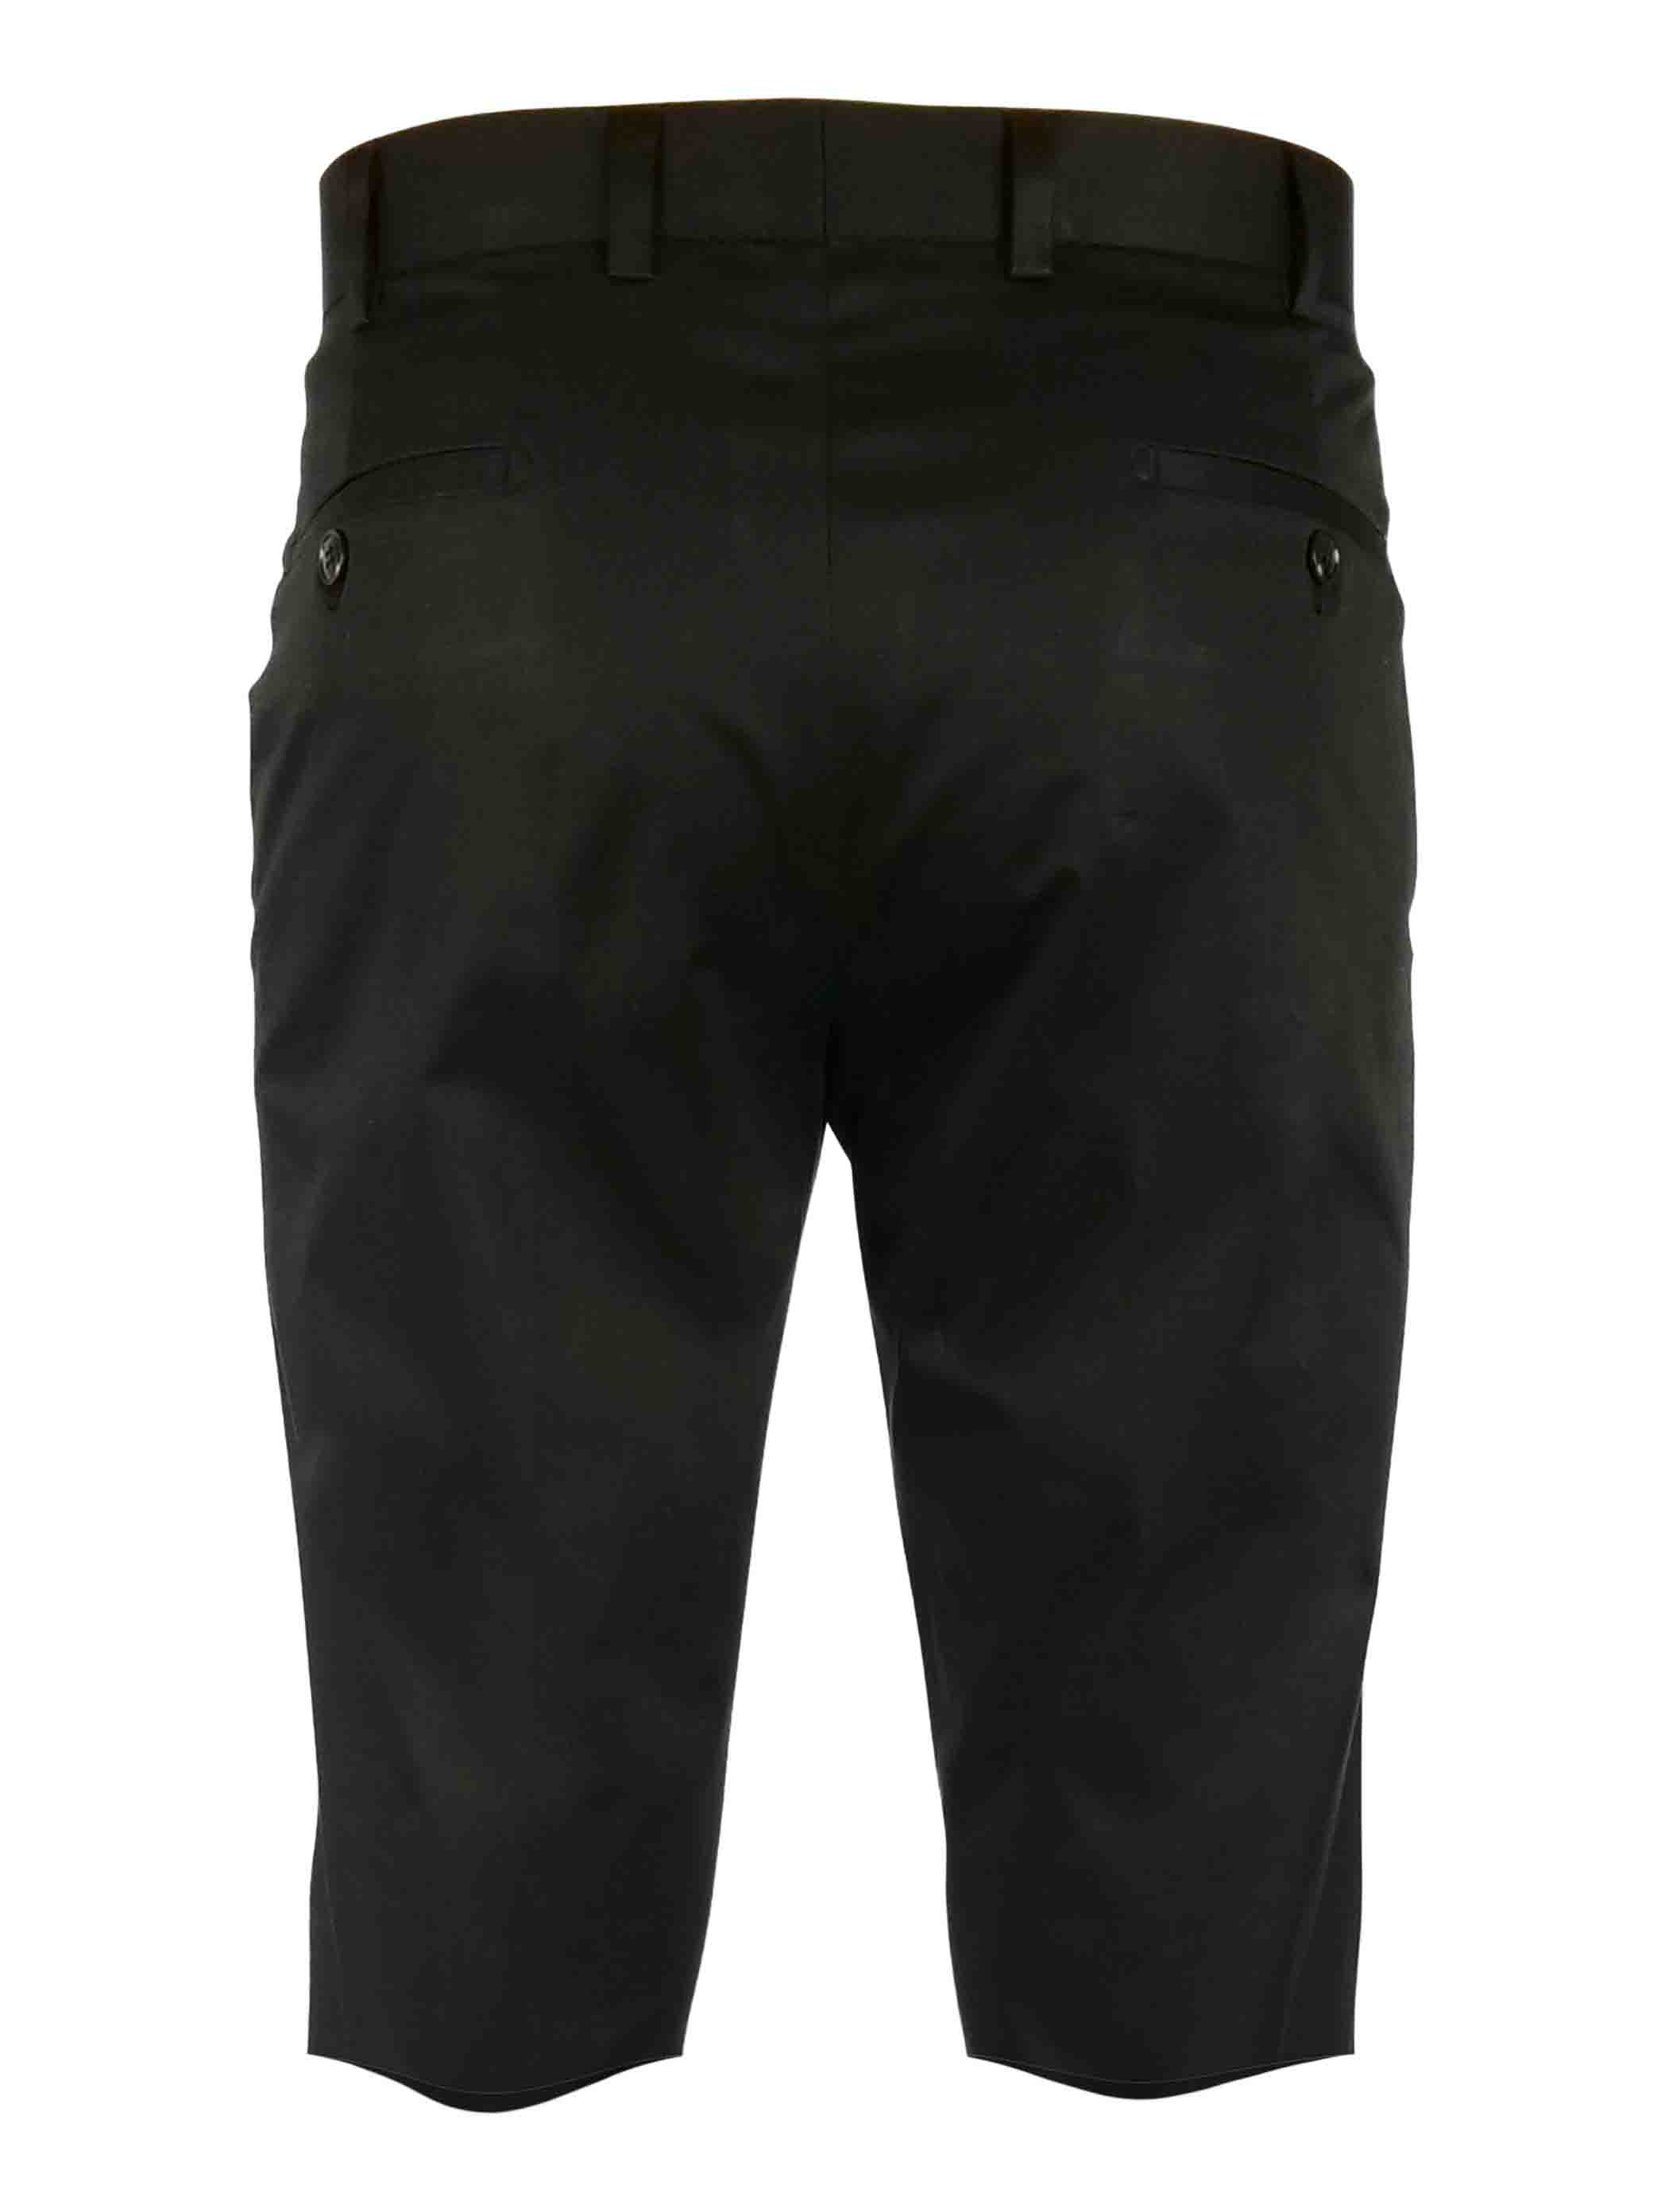 Men's Shorts - Black - Uniform Edit